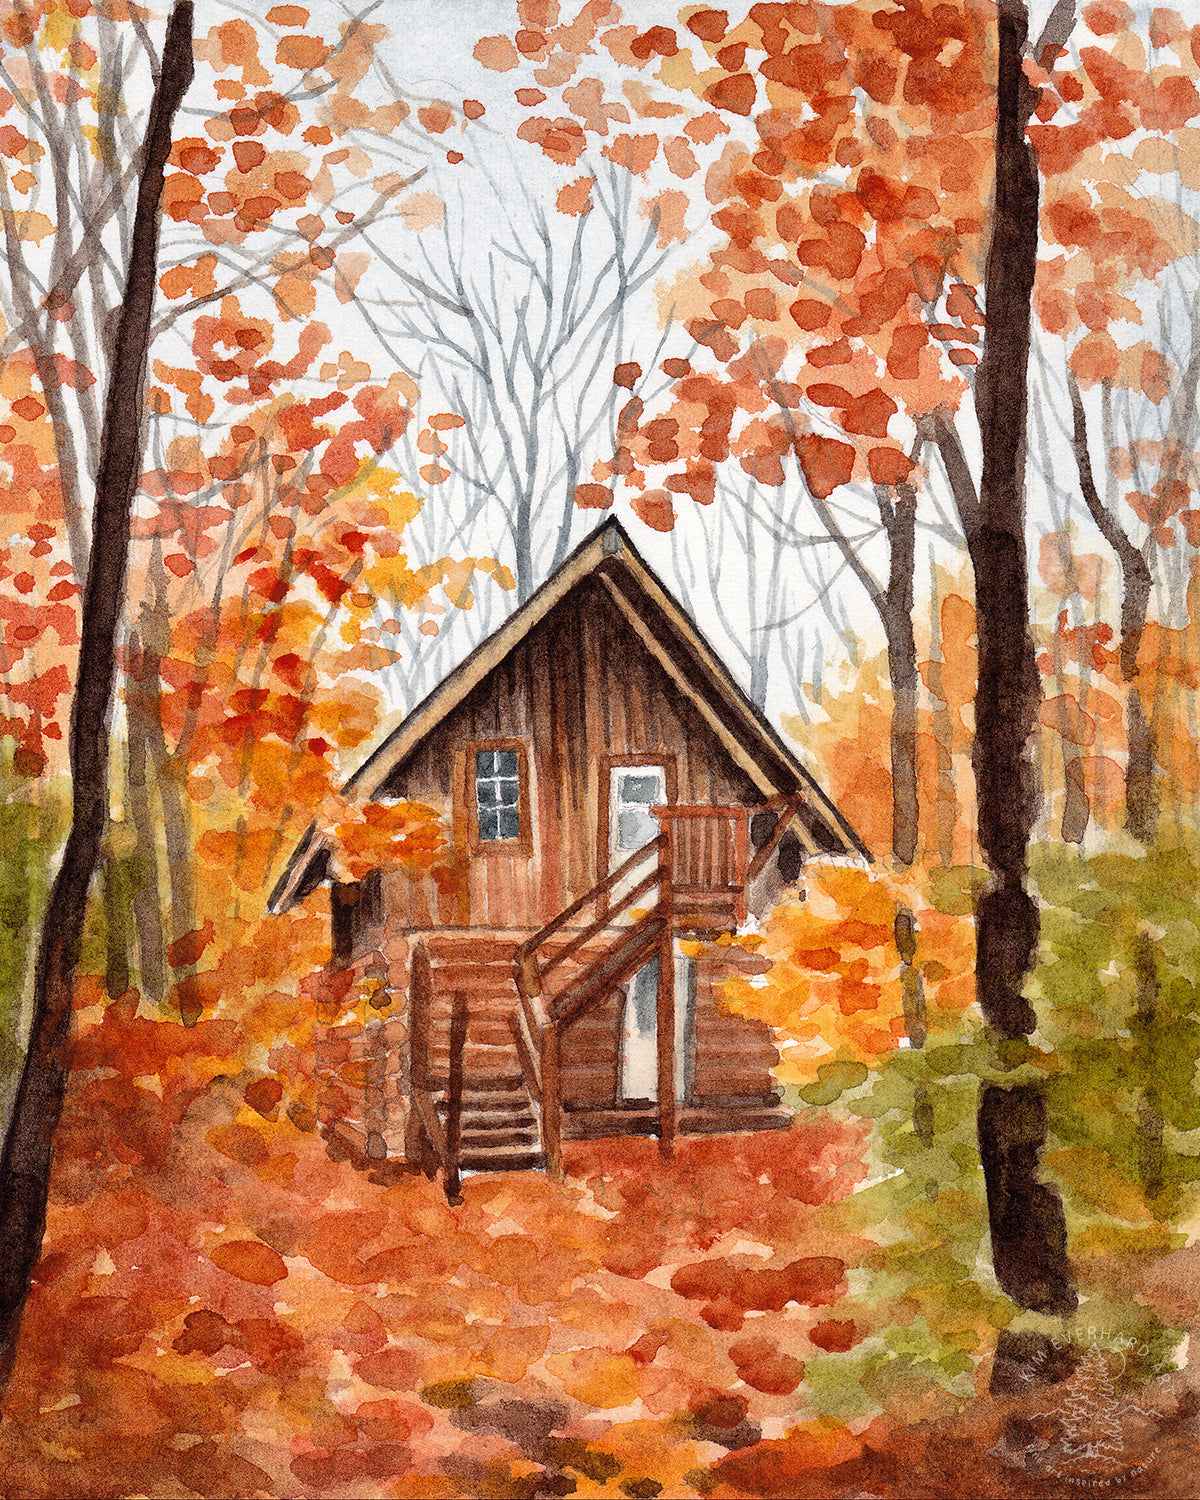 Cozy Woodland Cabin - Original Painting - 8x10 - Kim Everhard Art